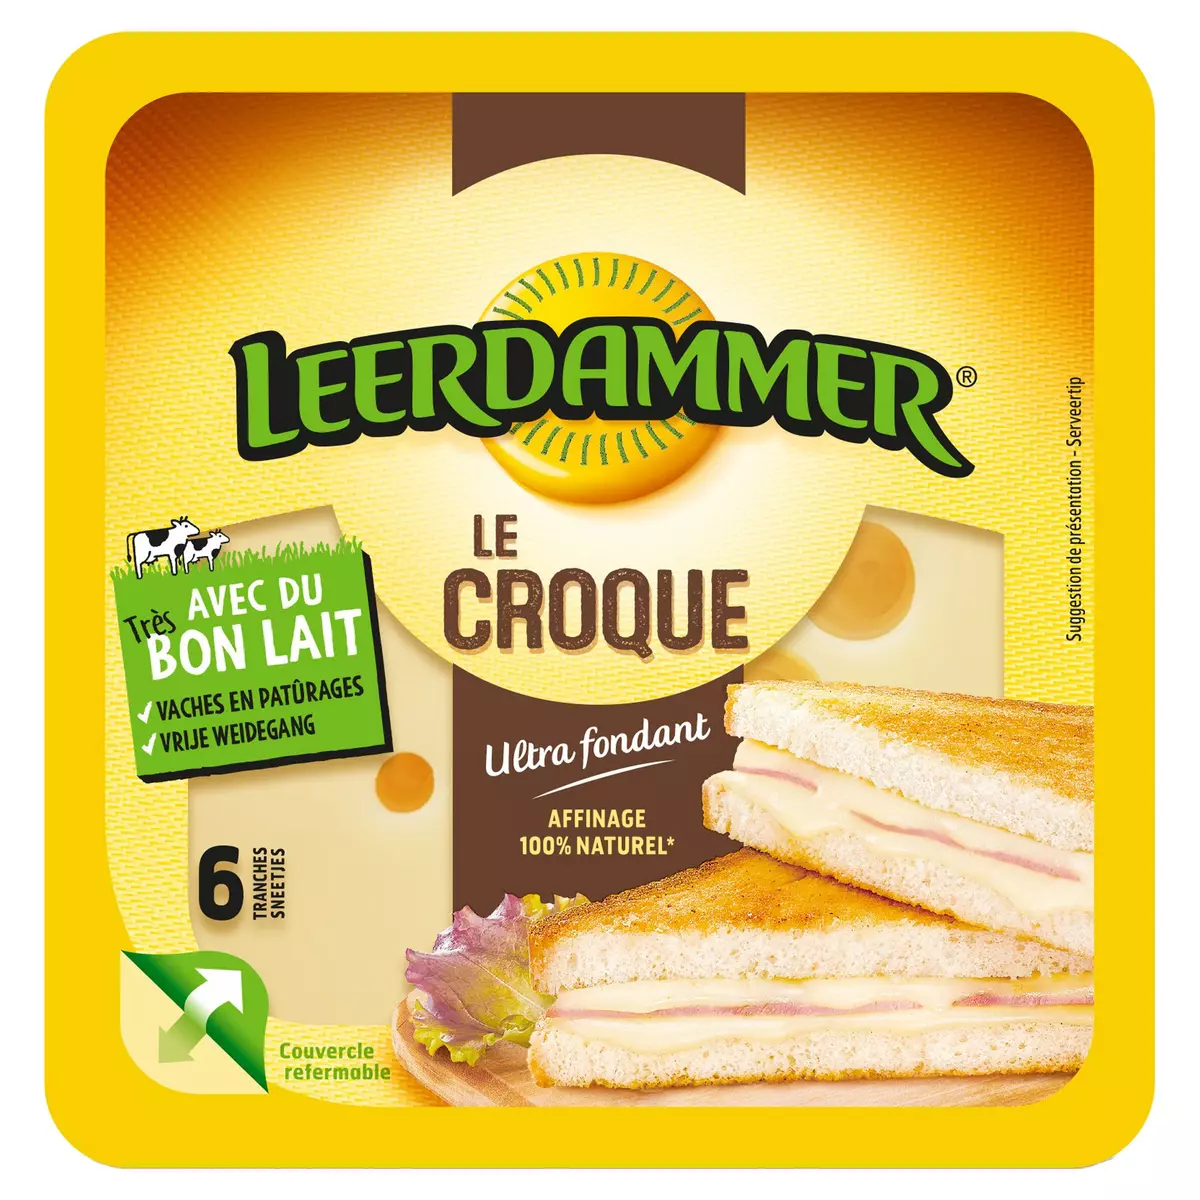 LEERDAMMER Le croque fromage spécial croque monsieur 6 tranches 150g